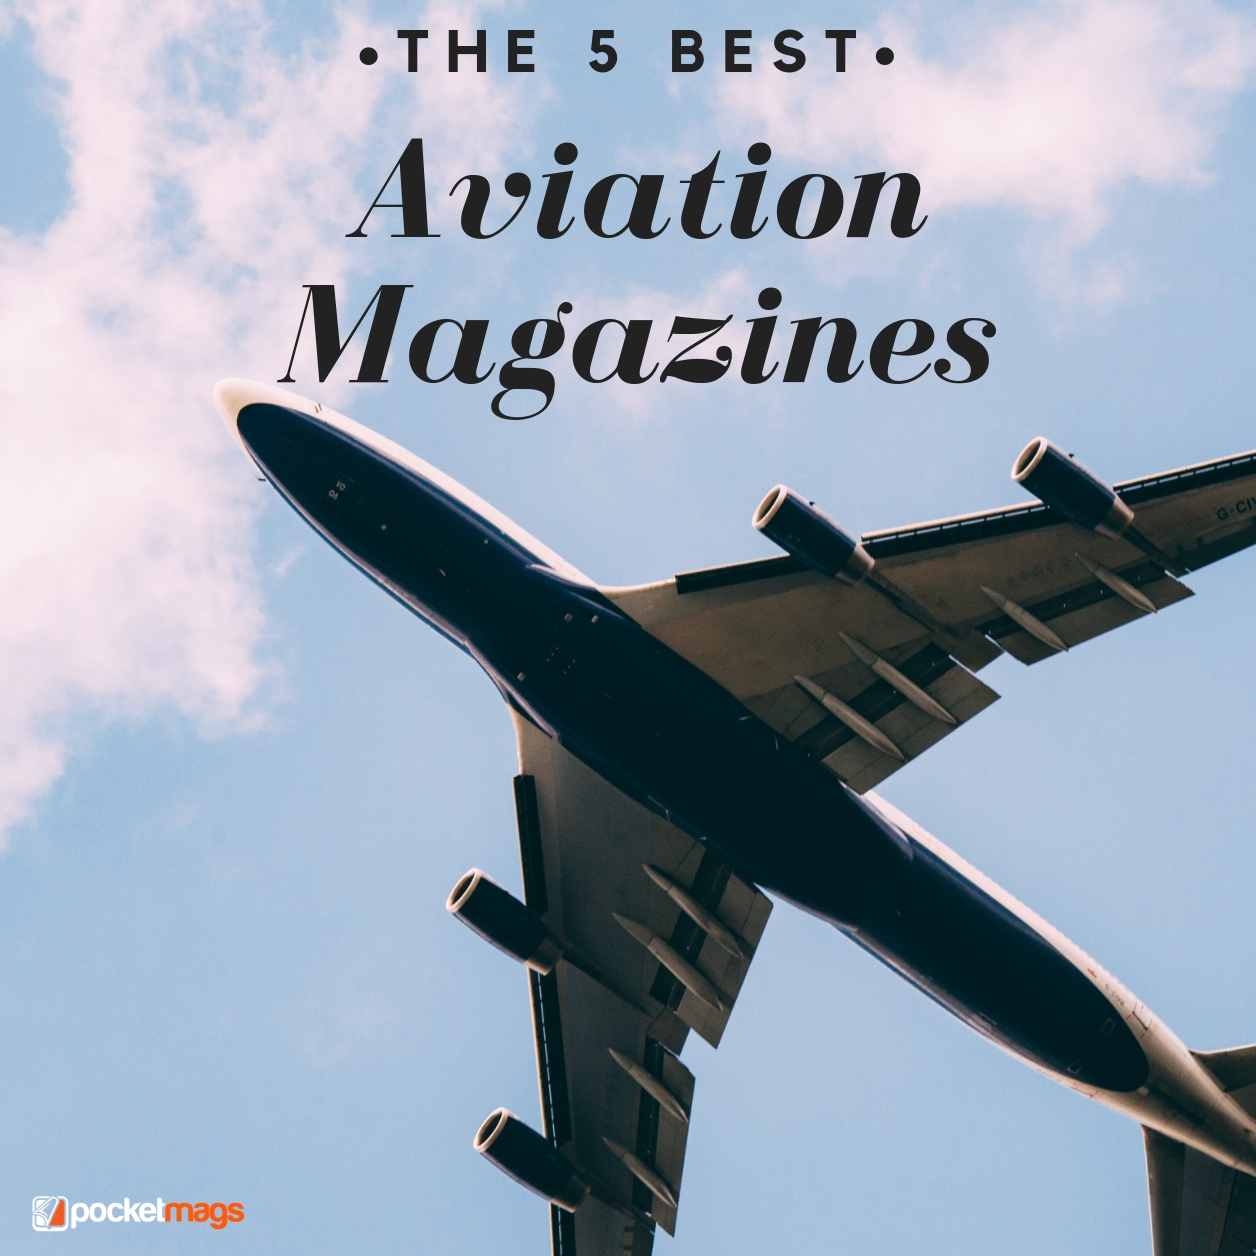 The 5 Best Aviation Magazines